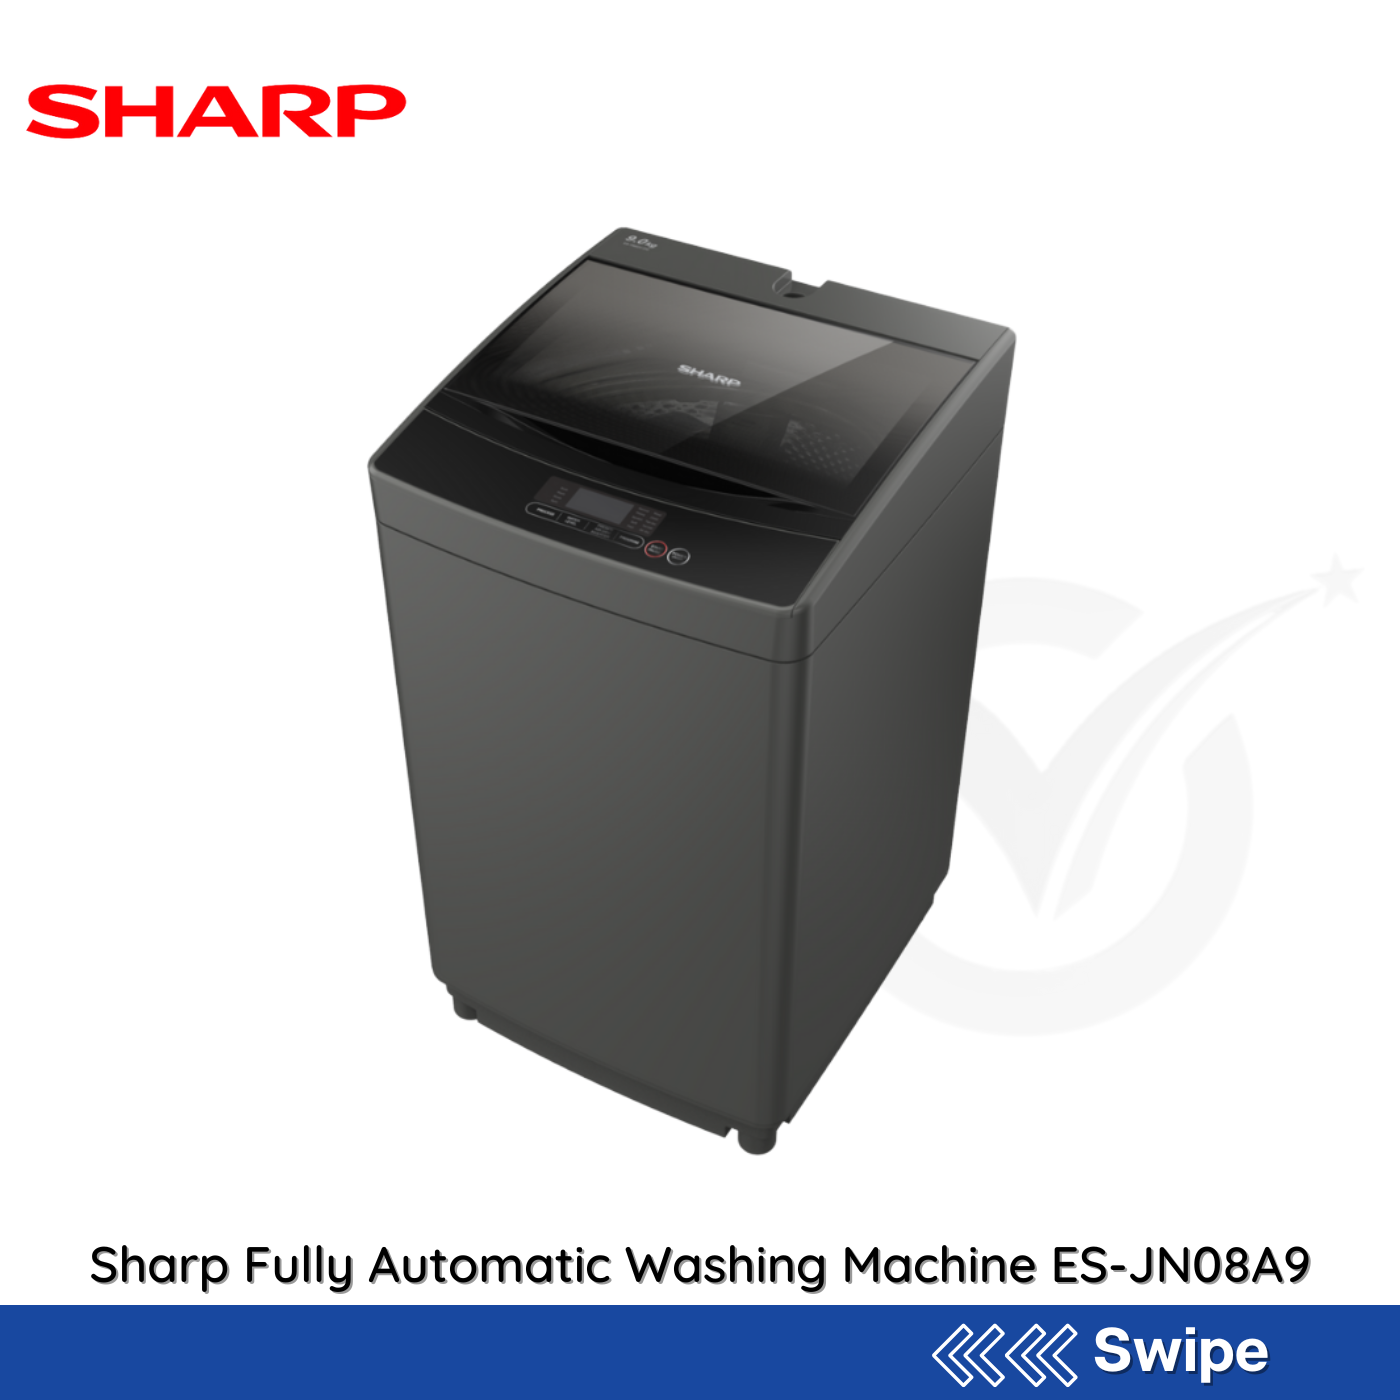 Sharp Fully Automatic Washing Machine ES-JN08A9